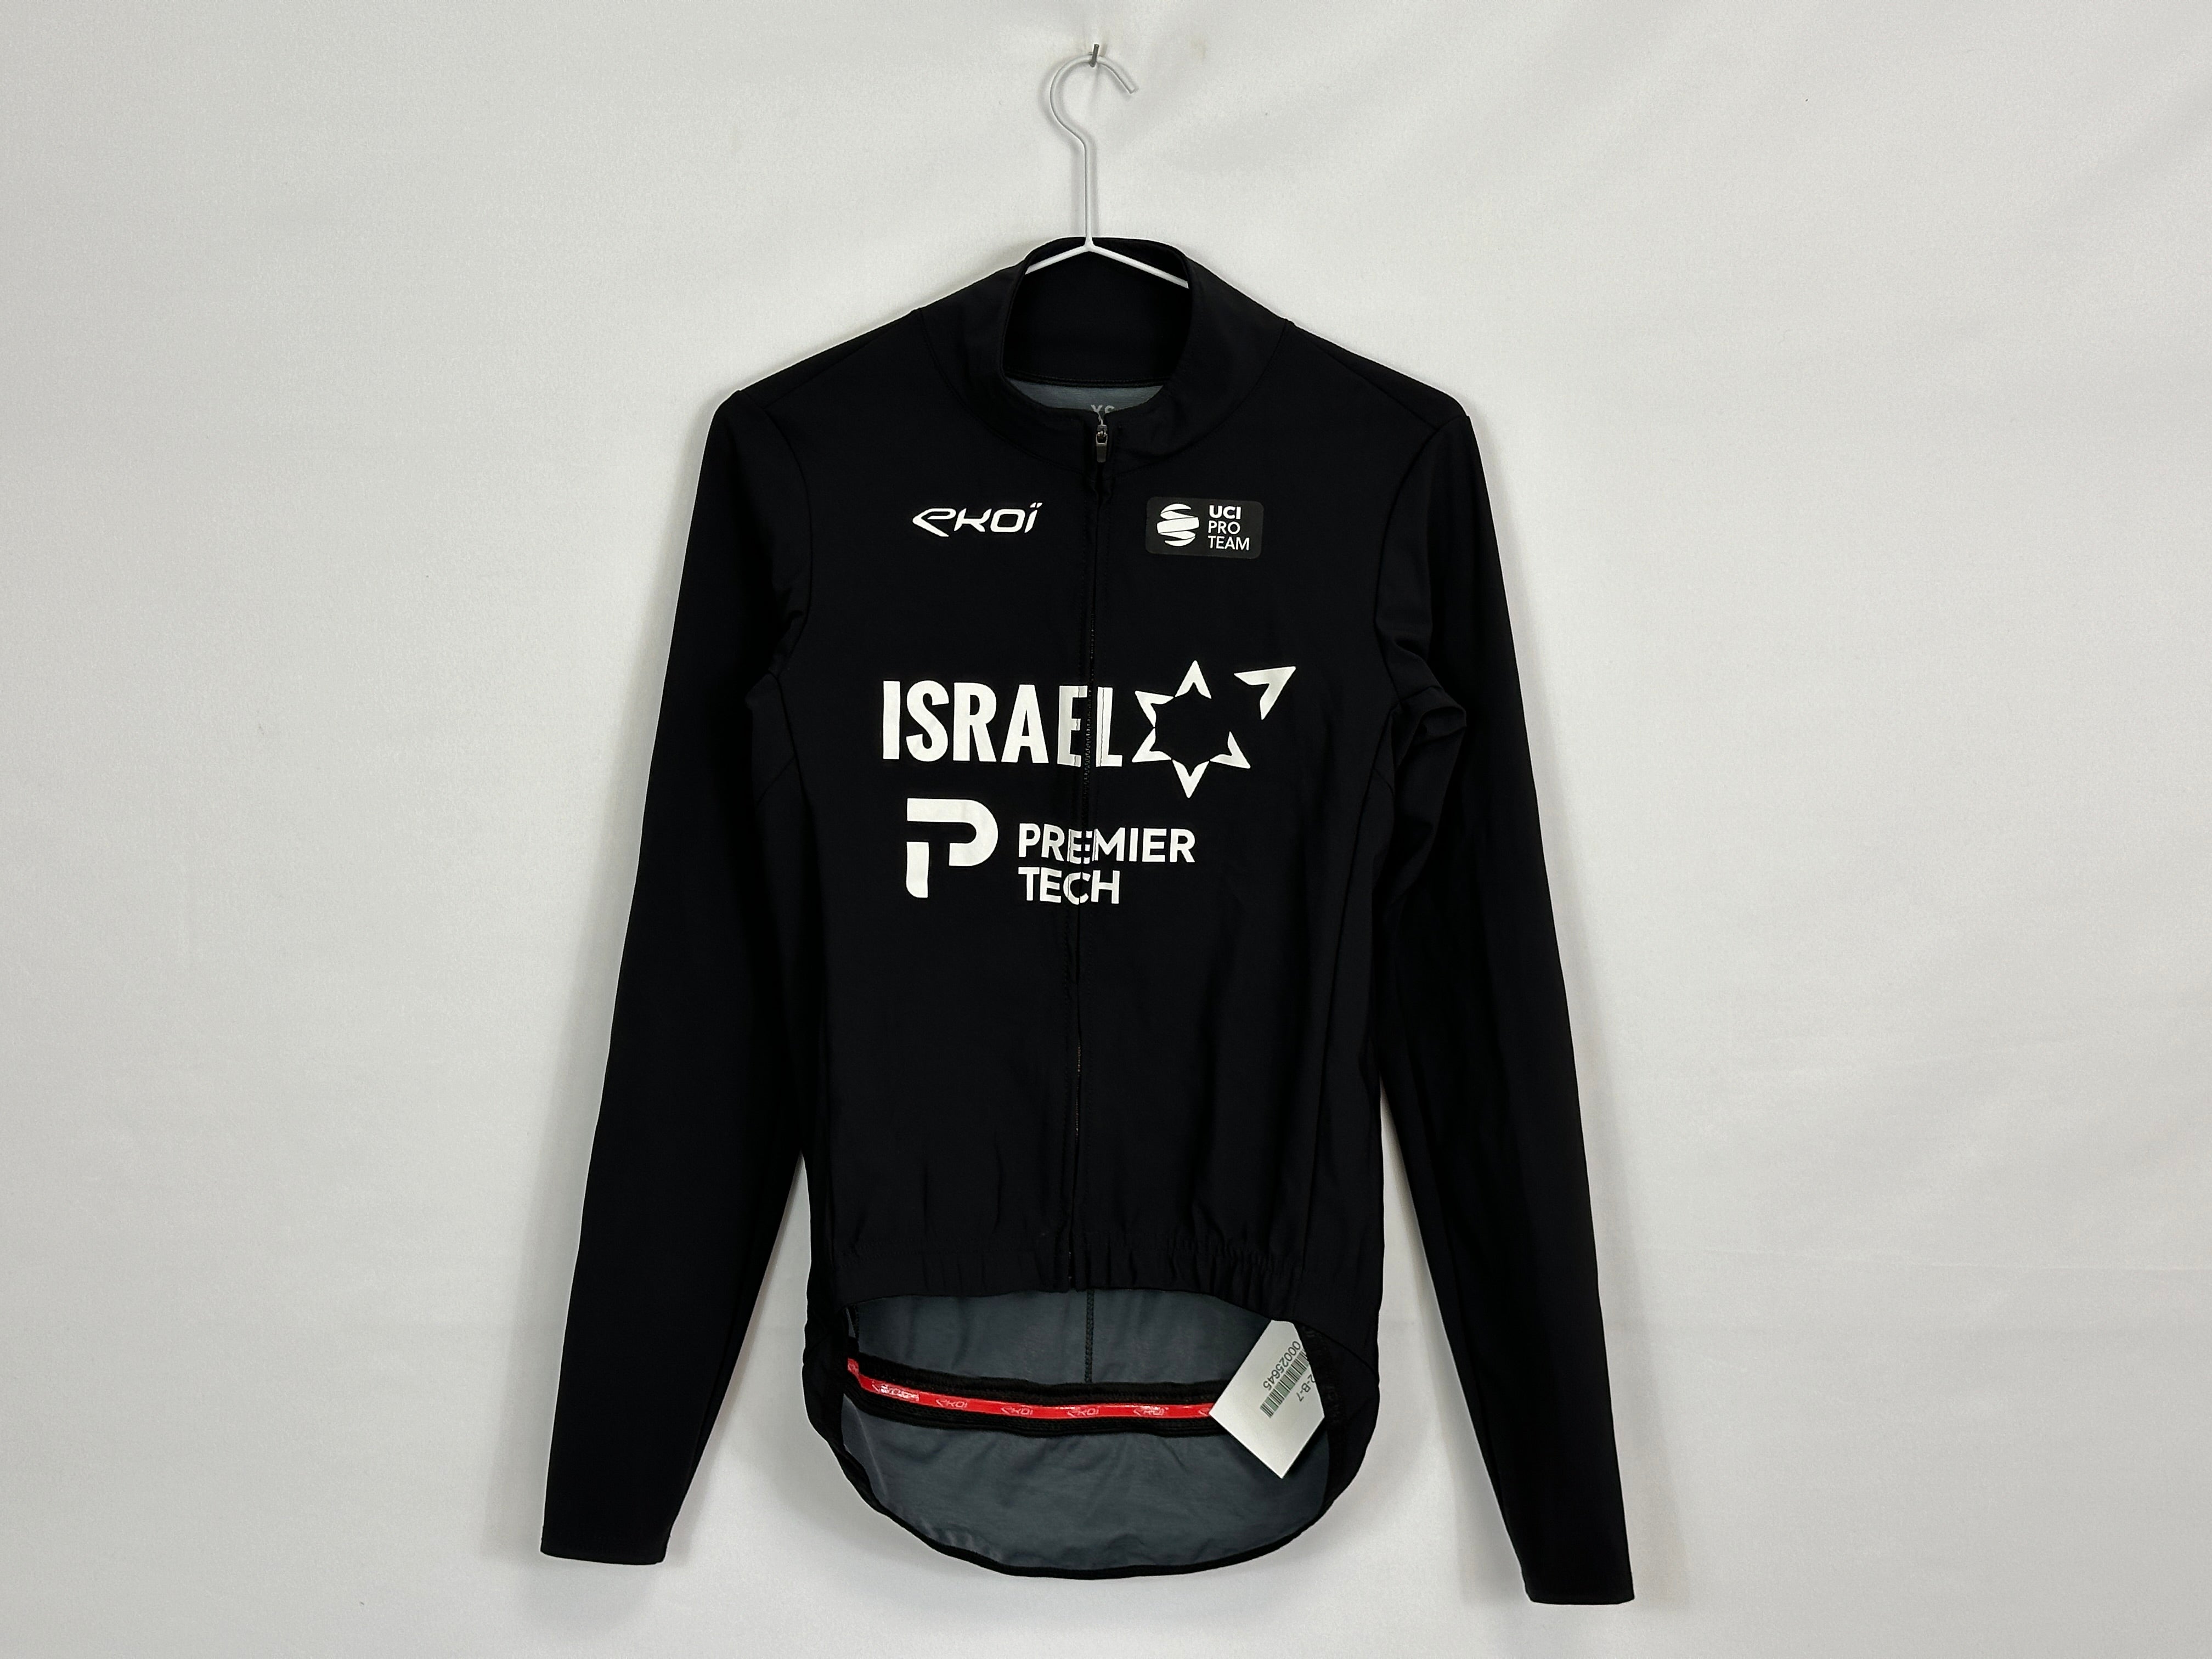 Team Israel Premier Tech - L/S Rain Resistant Jacket by Ekoi